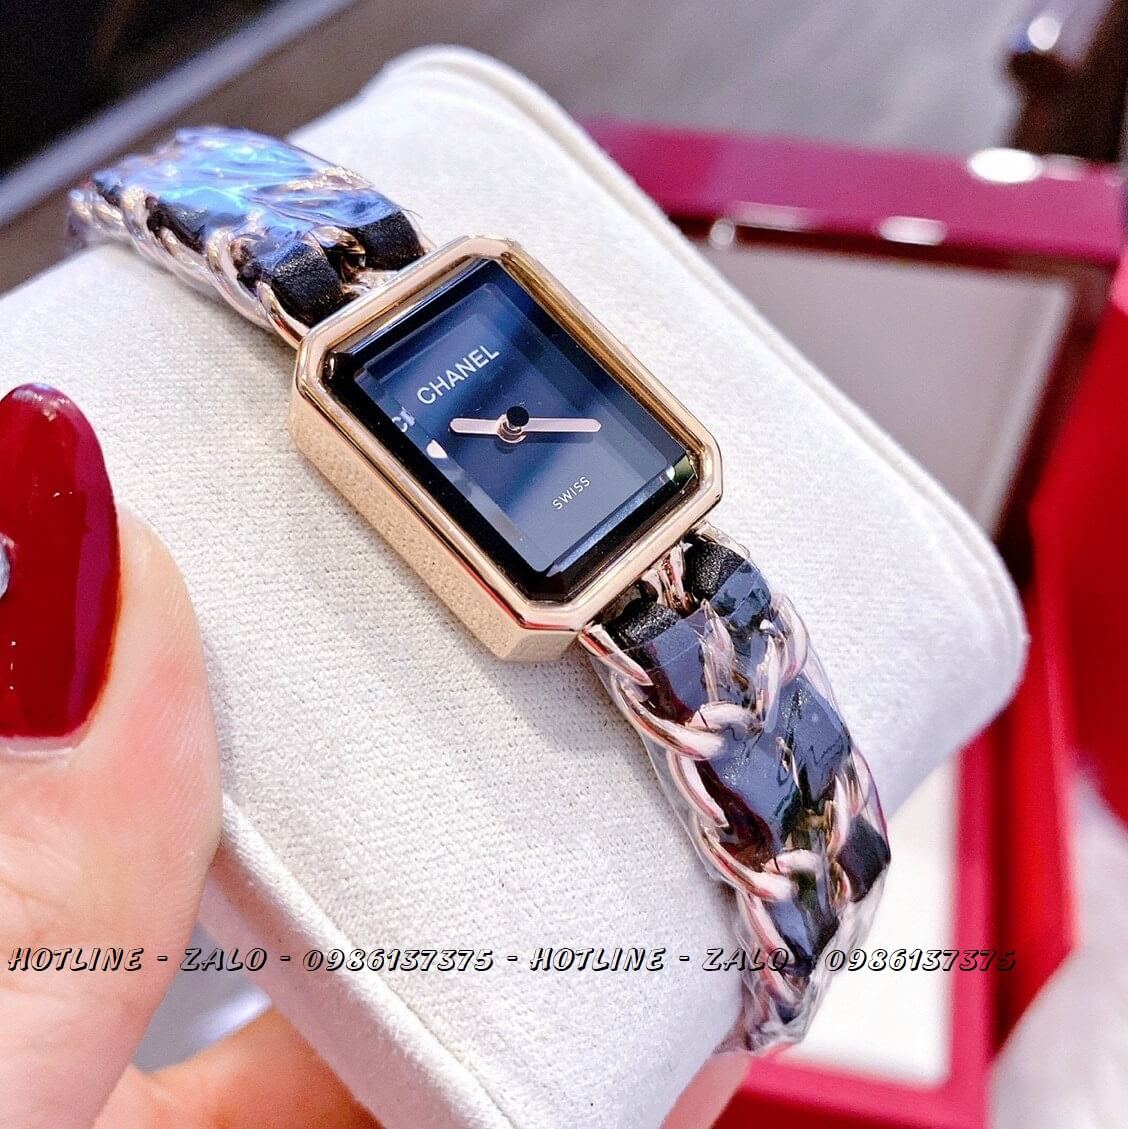 Chanel BOYFRIEND Tweed Diamond Watch in 18K Gold 515312  Beladora